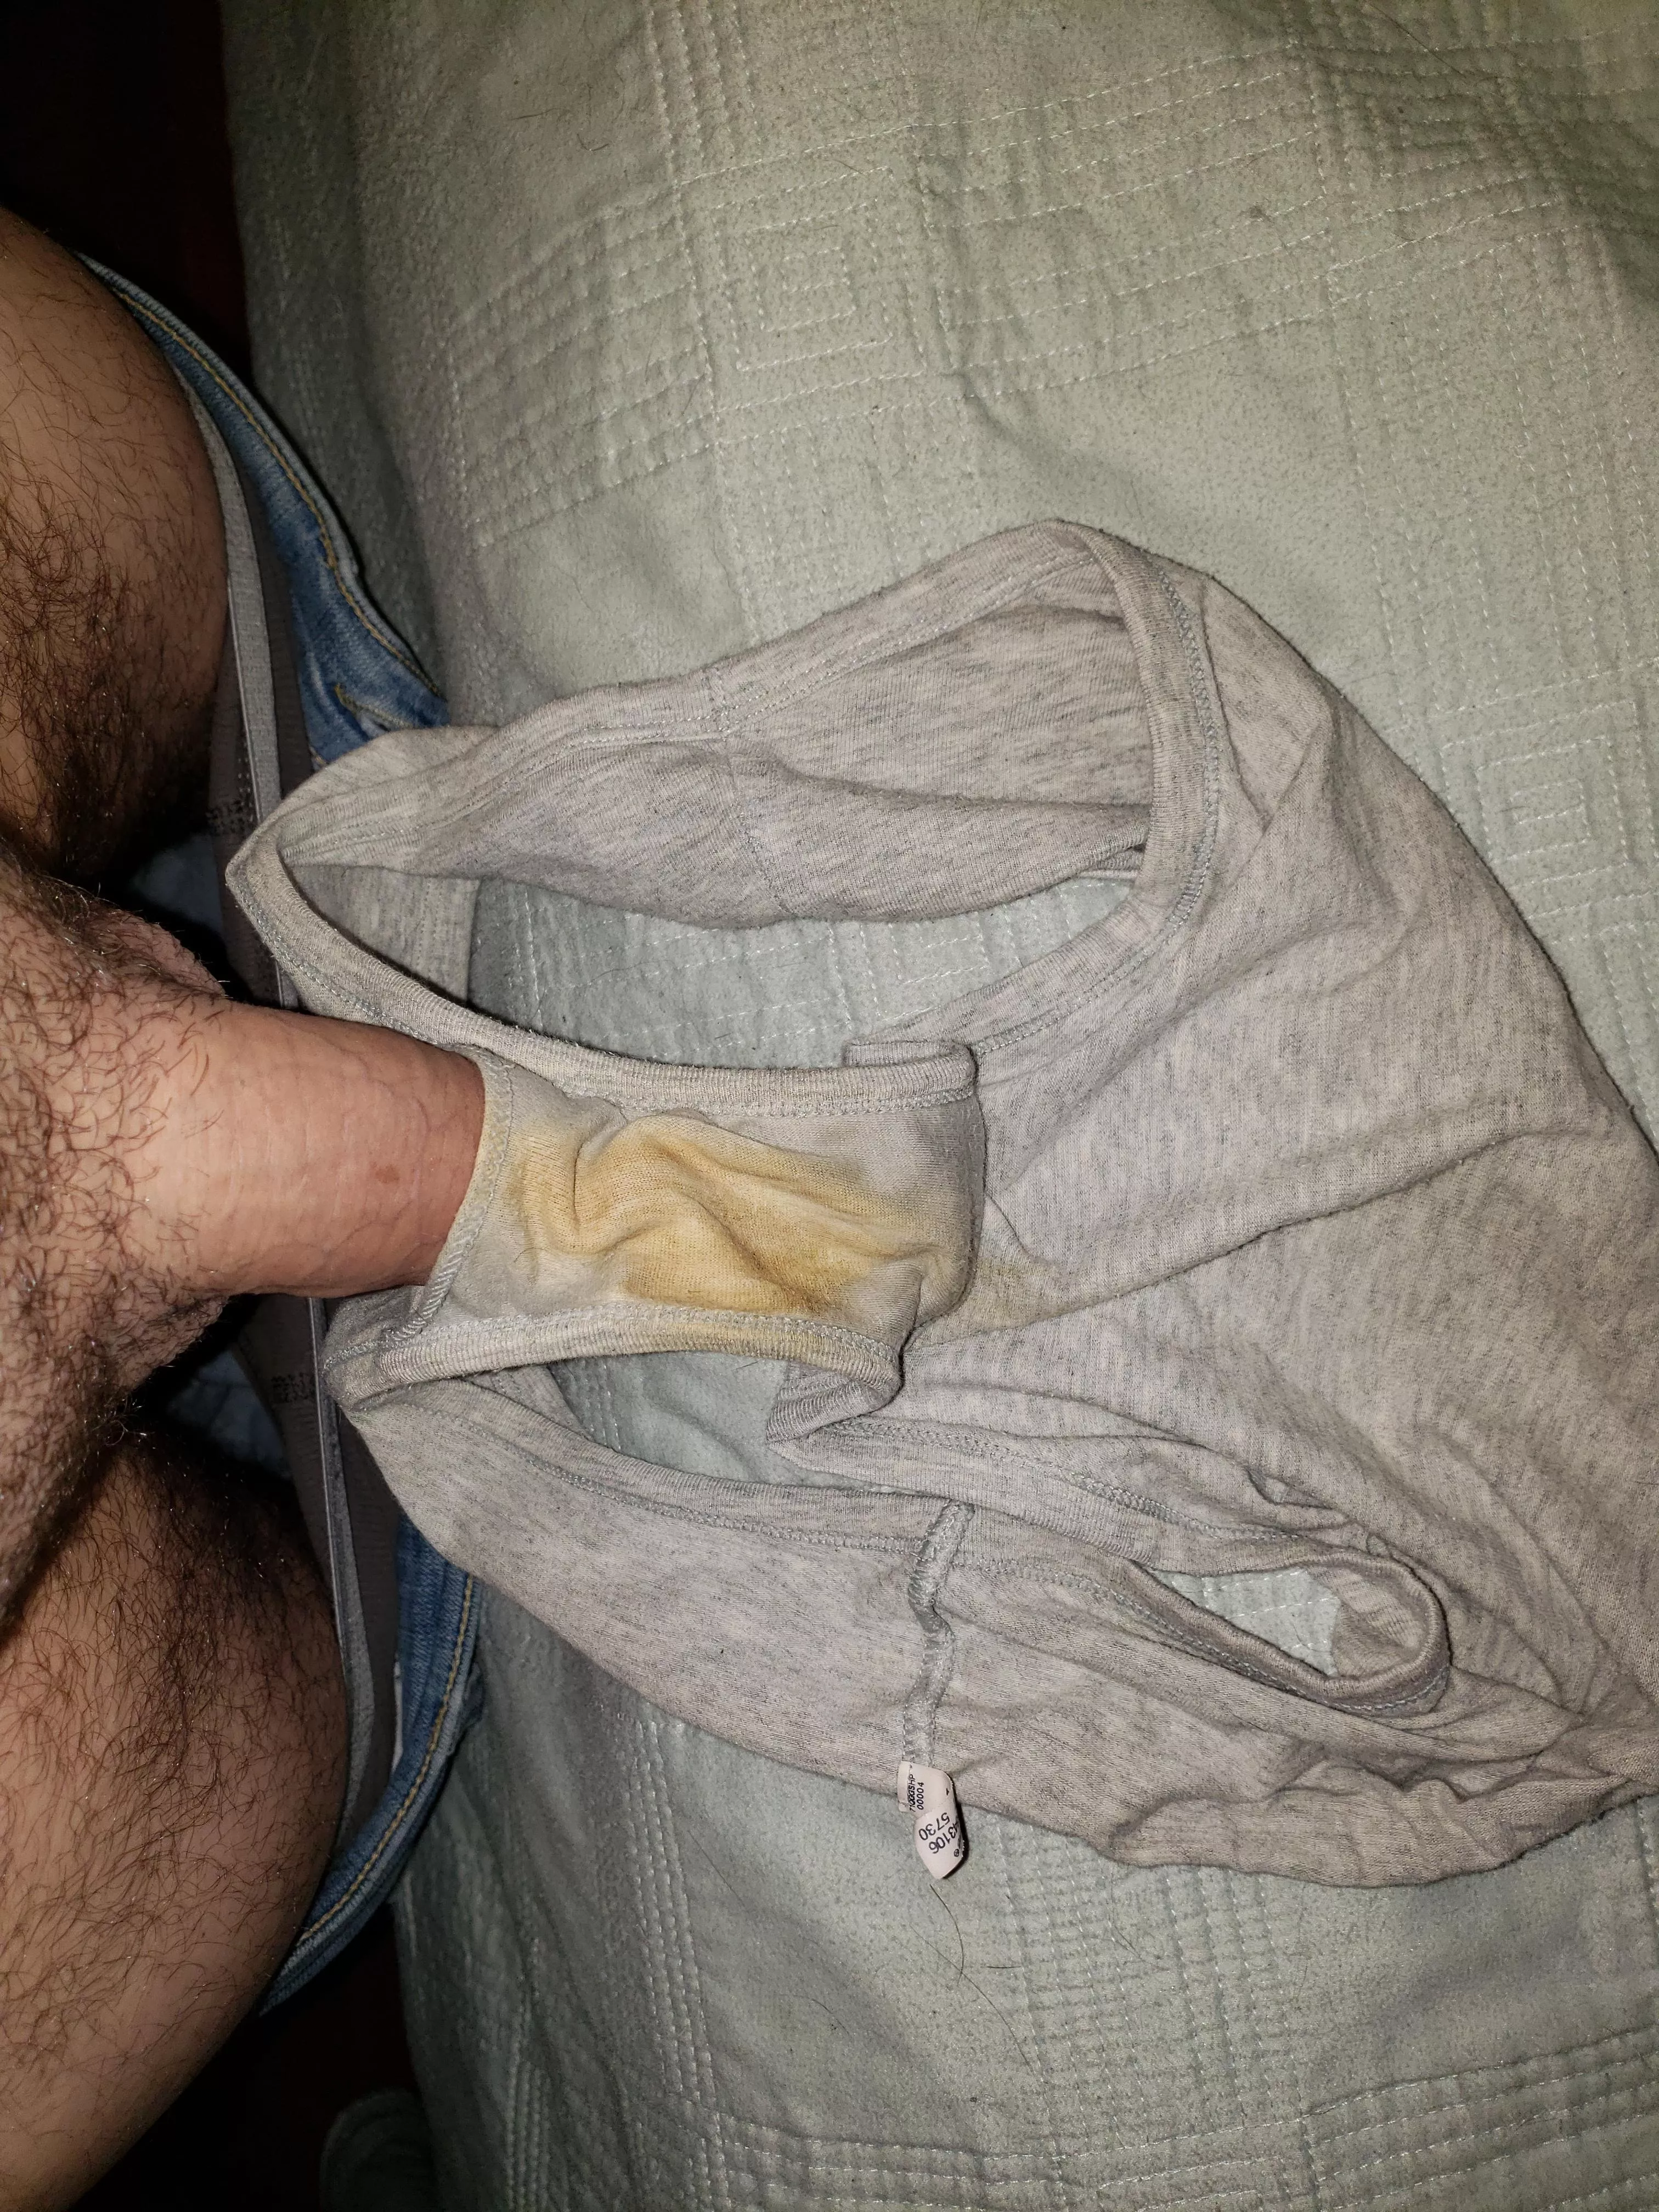 More fun with a pair of my wifes dirty panties nudes cummedpanties NUDE-PICS photo